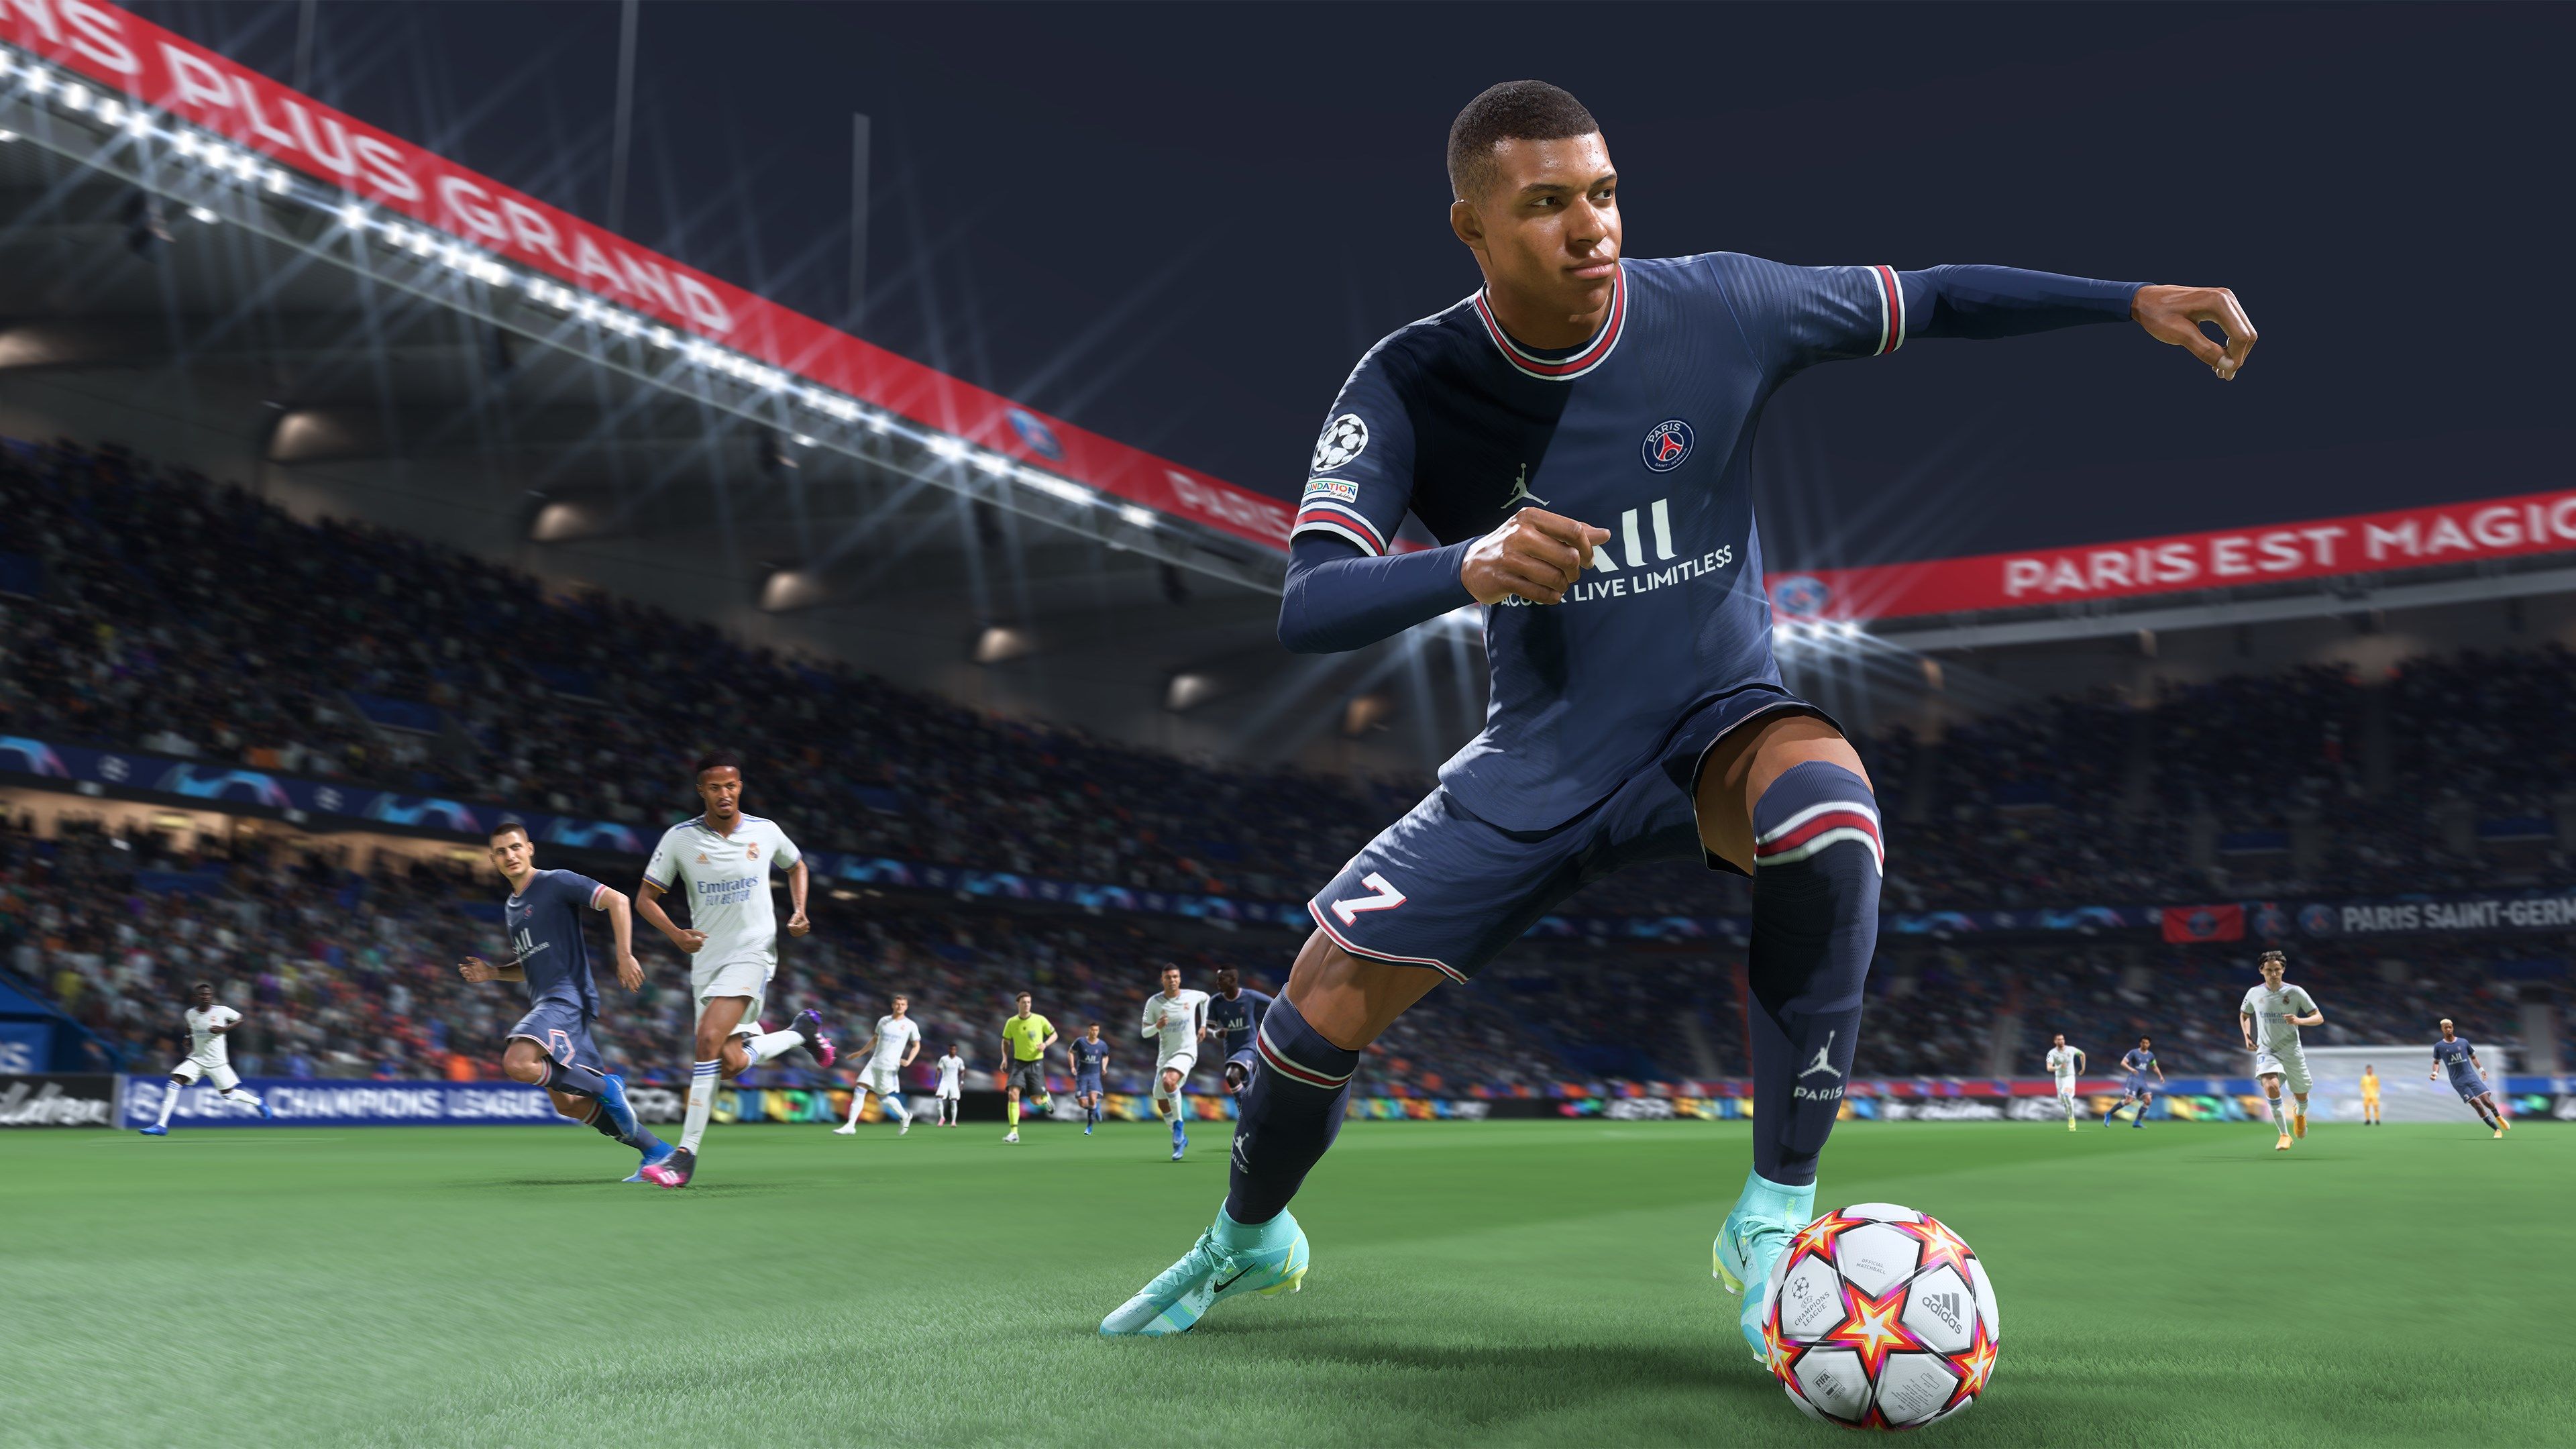 FIFA 22 cover art